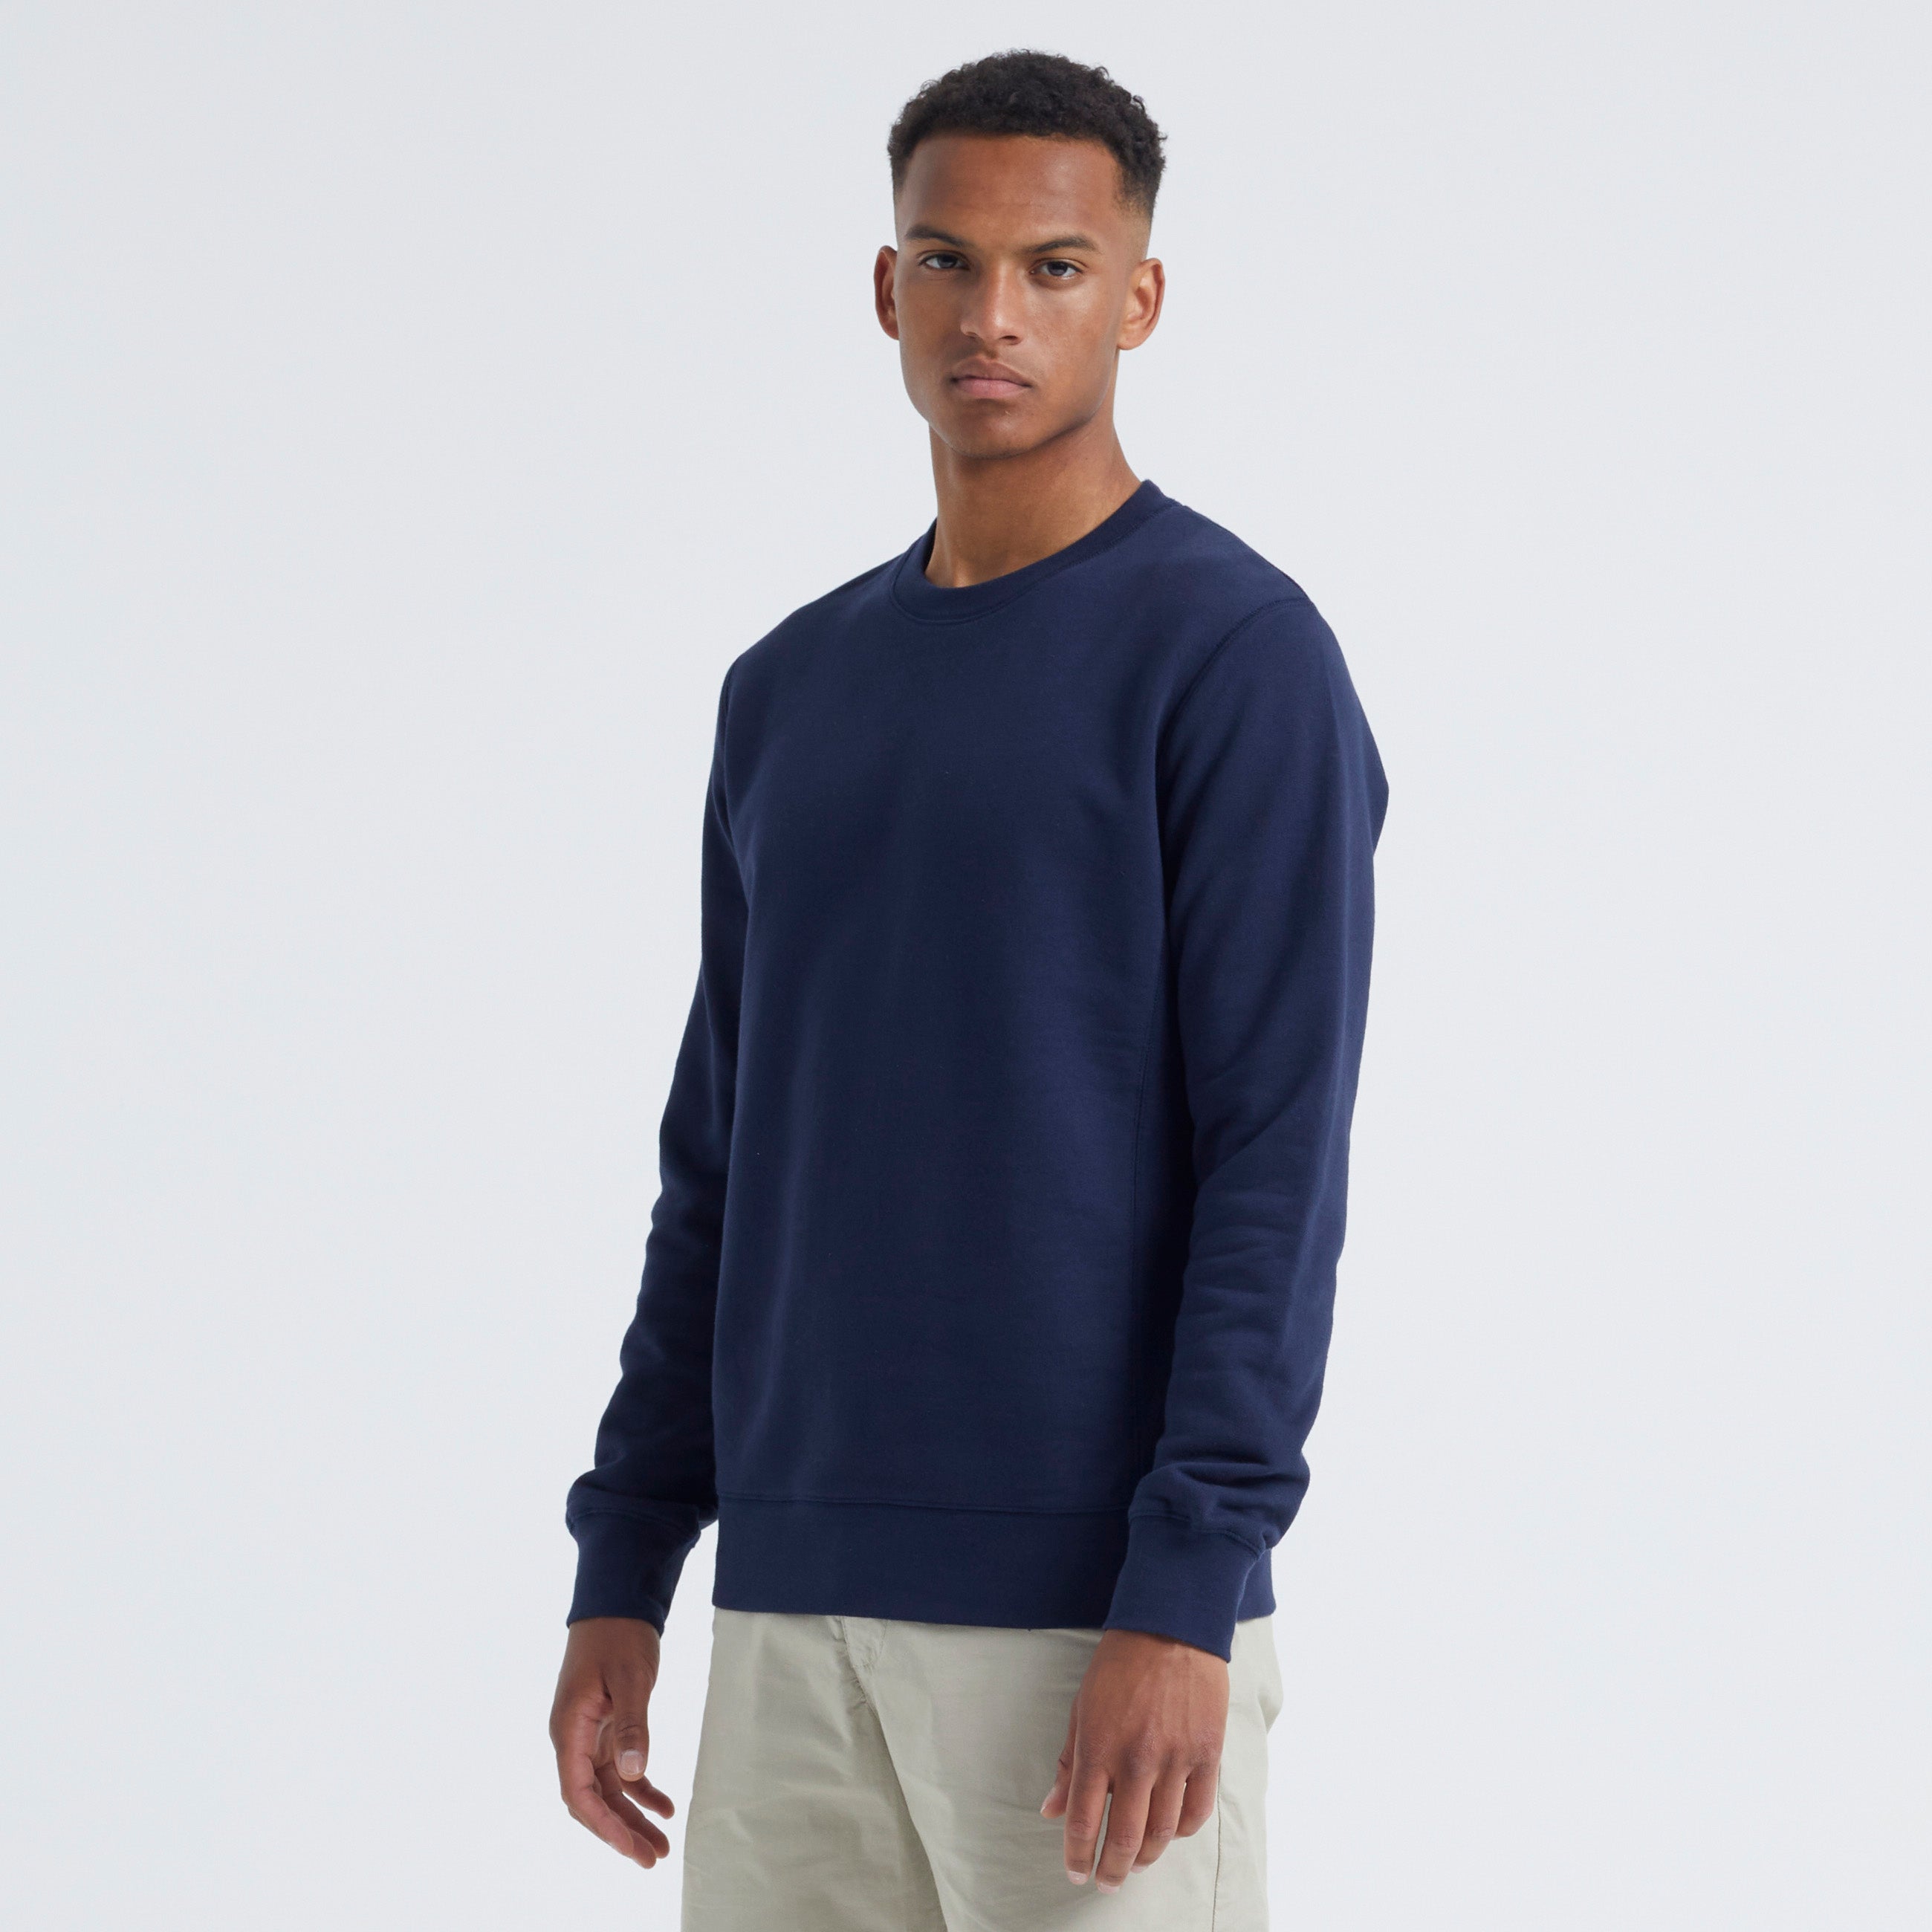 The Organic Sweatshirt GOTS - Navy Blazer - S / Navy Blazer